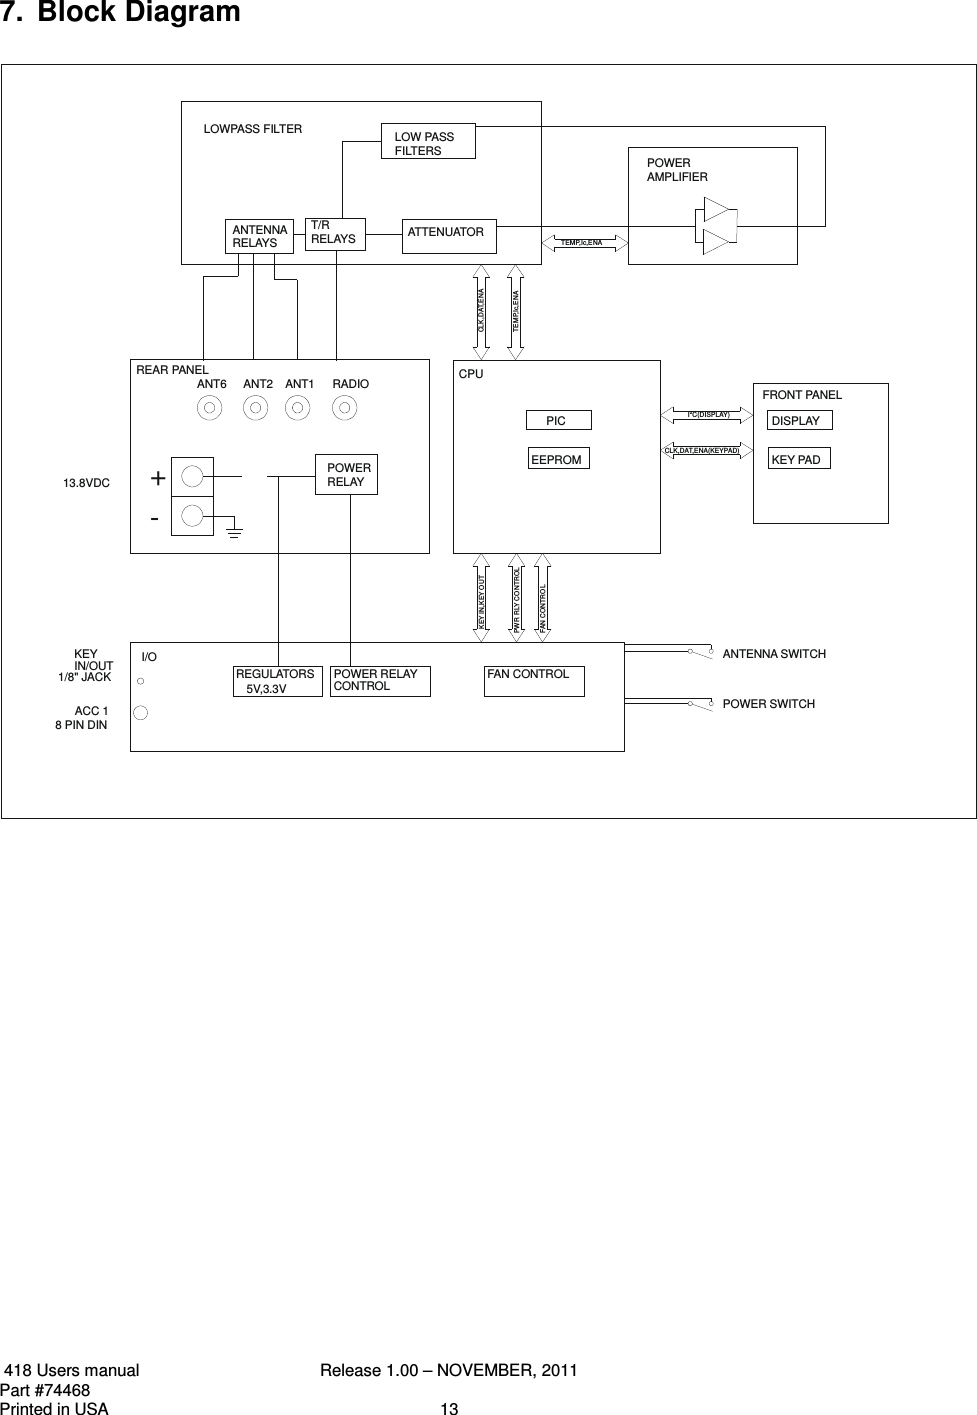  418 Users manual  Release 1.00 – NOVEMBER, 2011   Part #74468   Printed in USA  13 7.  Block Diagram                                                                                          13.8VDC+-POWERRELAYANT6 ANT2 ANT1 RADIOANTENNARELAYST/RRELAYS ATTENUATORPOWERAMPLIFIERLOW PASSFILTERSKEYACC 1REGULATORSIN/OUTCPULOWPASS FILTERFRONT PANELDISPLAYKEY PADPOWER SWITCHANTENNA SWITCHEEPROMPICIC(DISPLAY)2CLK,DAT,ENA(KEYPAD)POWER RELAY FAN CONTROLCONTROL5V,3.3VCLK,DAT,ENATEMP,Ic,ENATEMP,Ic,ENAI/OREAR PANELKEY IN,KEY OUTPWR RLY CONTROLFAN CONTROL1/8&quot; JACK8 PIN DIN